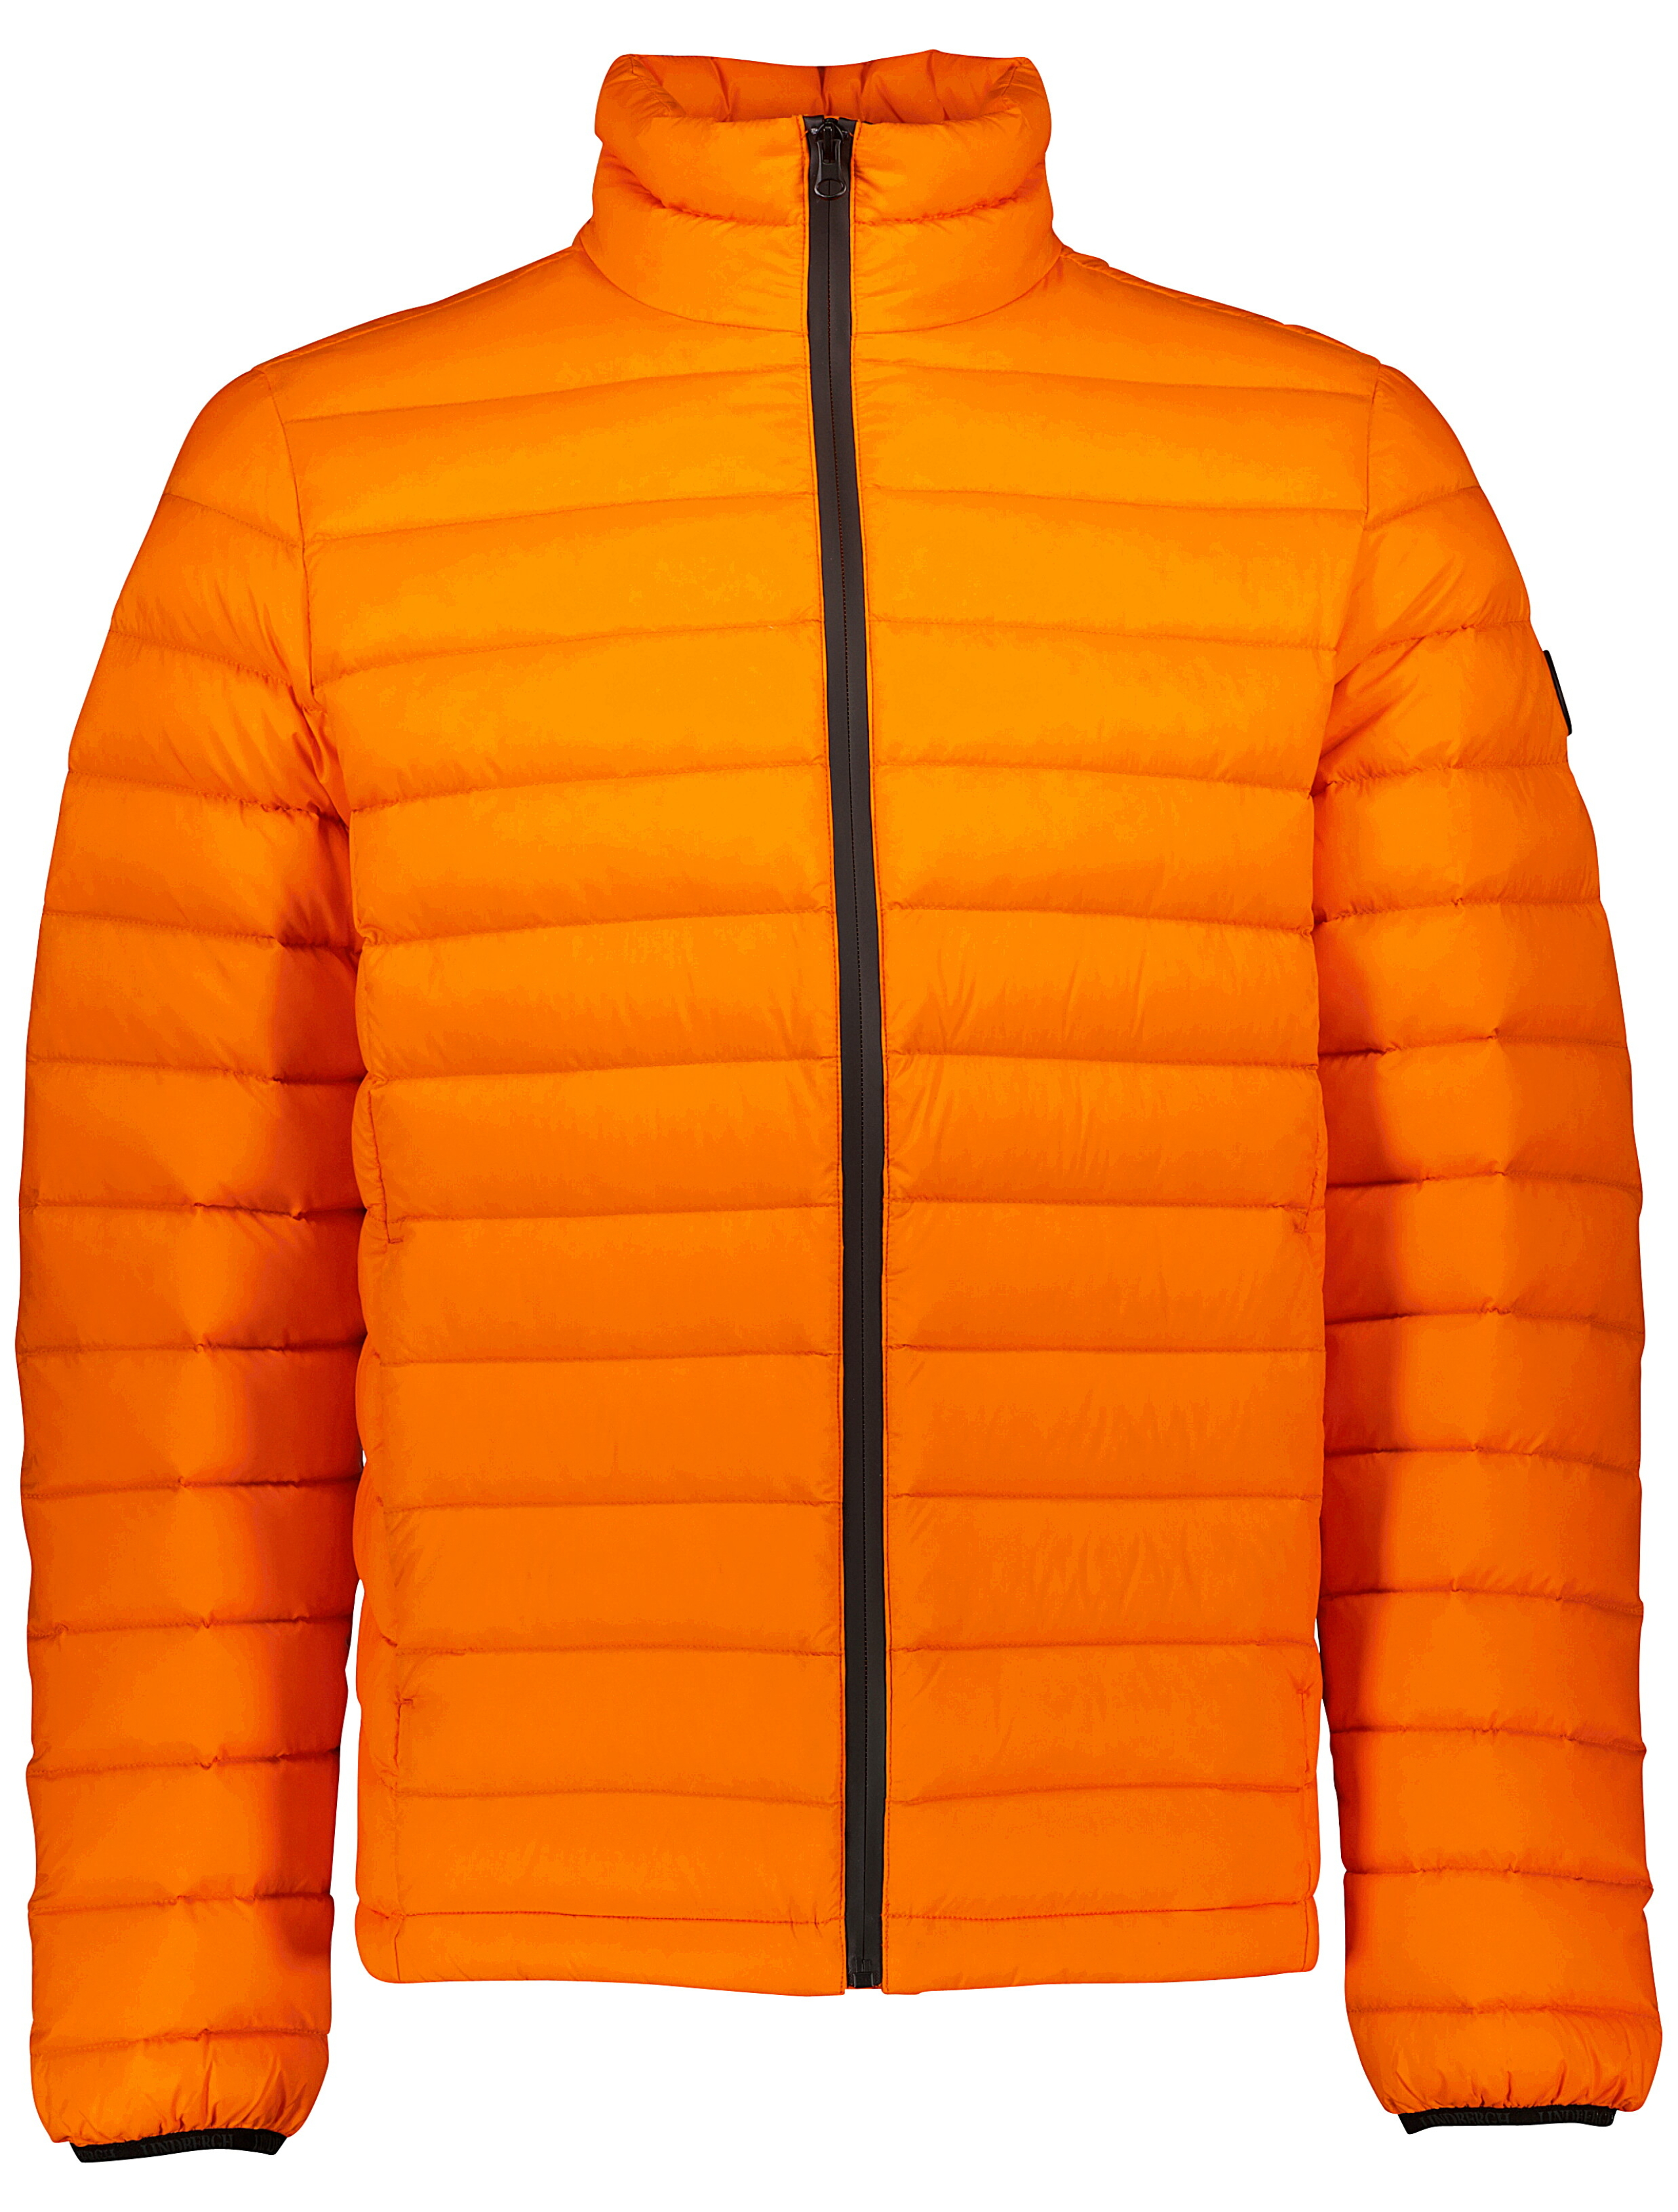 Lindbergh Down jacket orange / orange